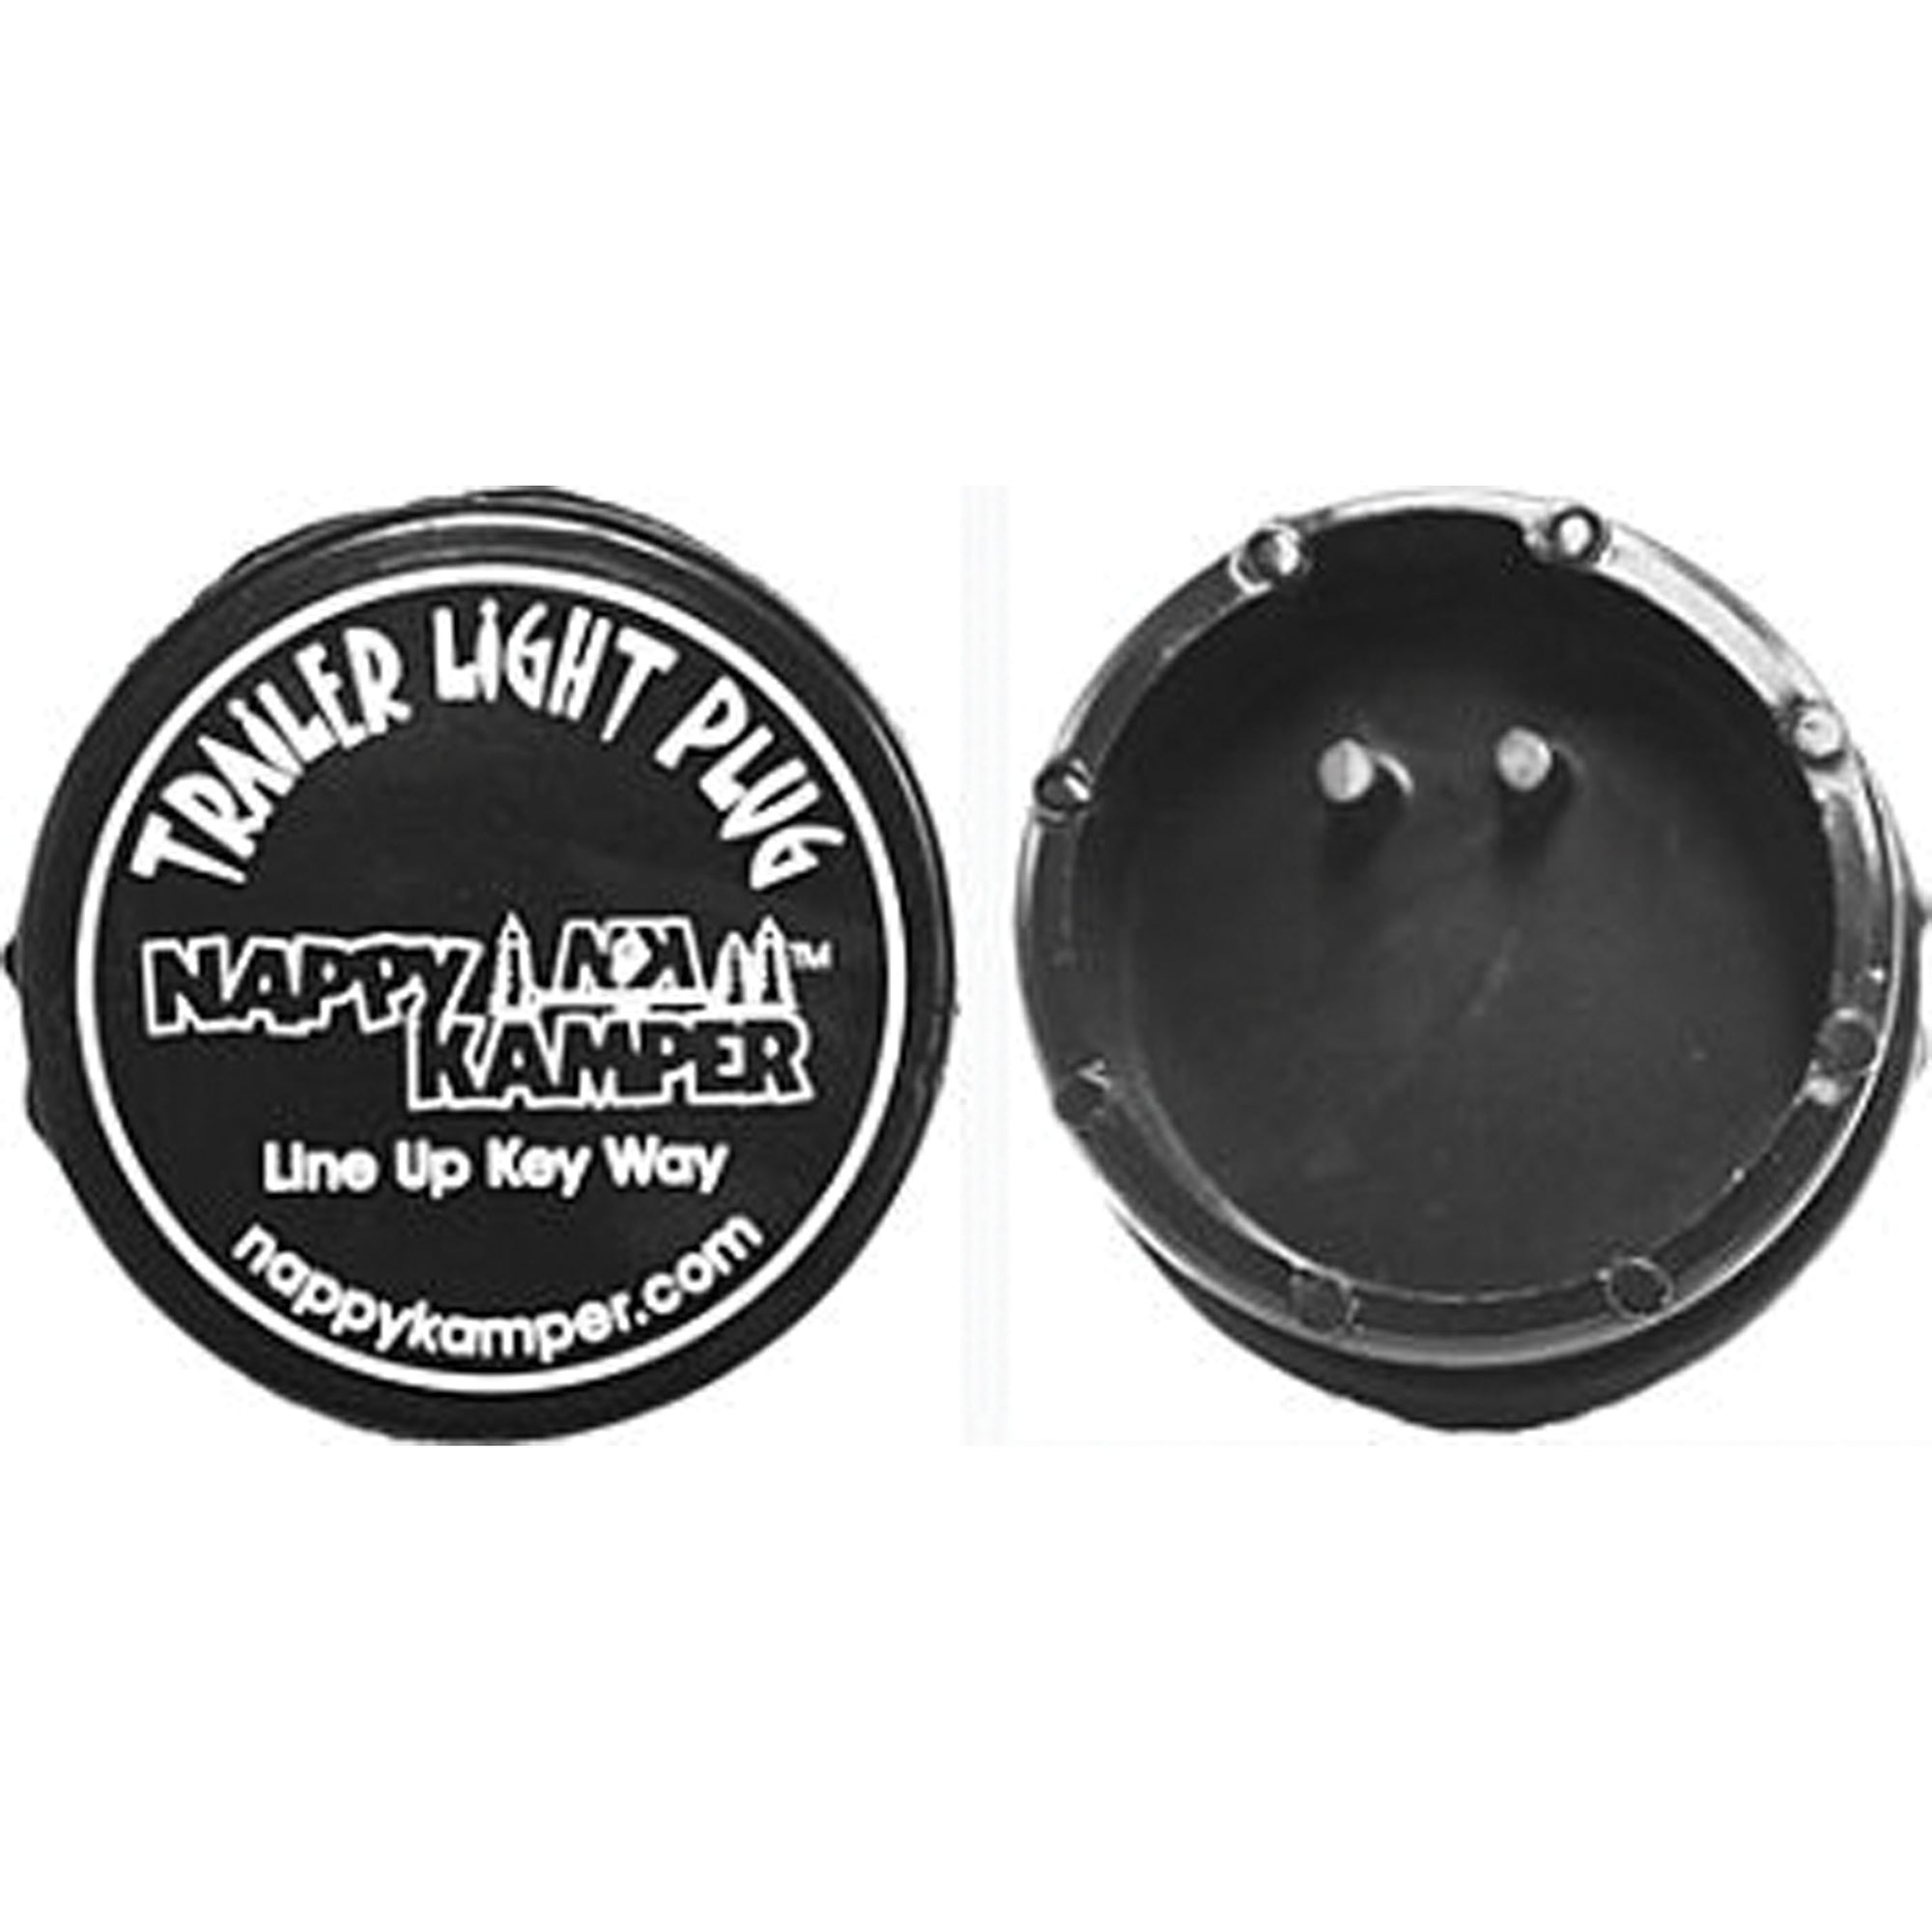 AP Products 008-100 Nappy Kamper Trailer Light Plug